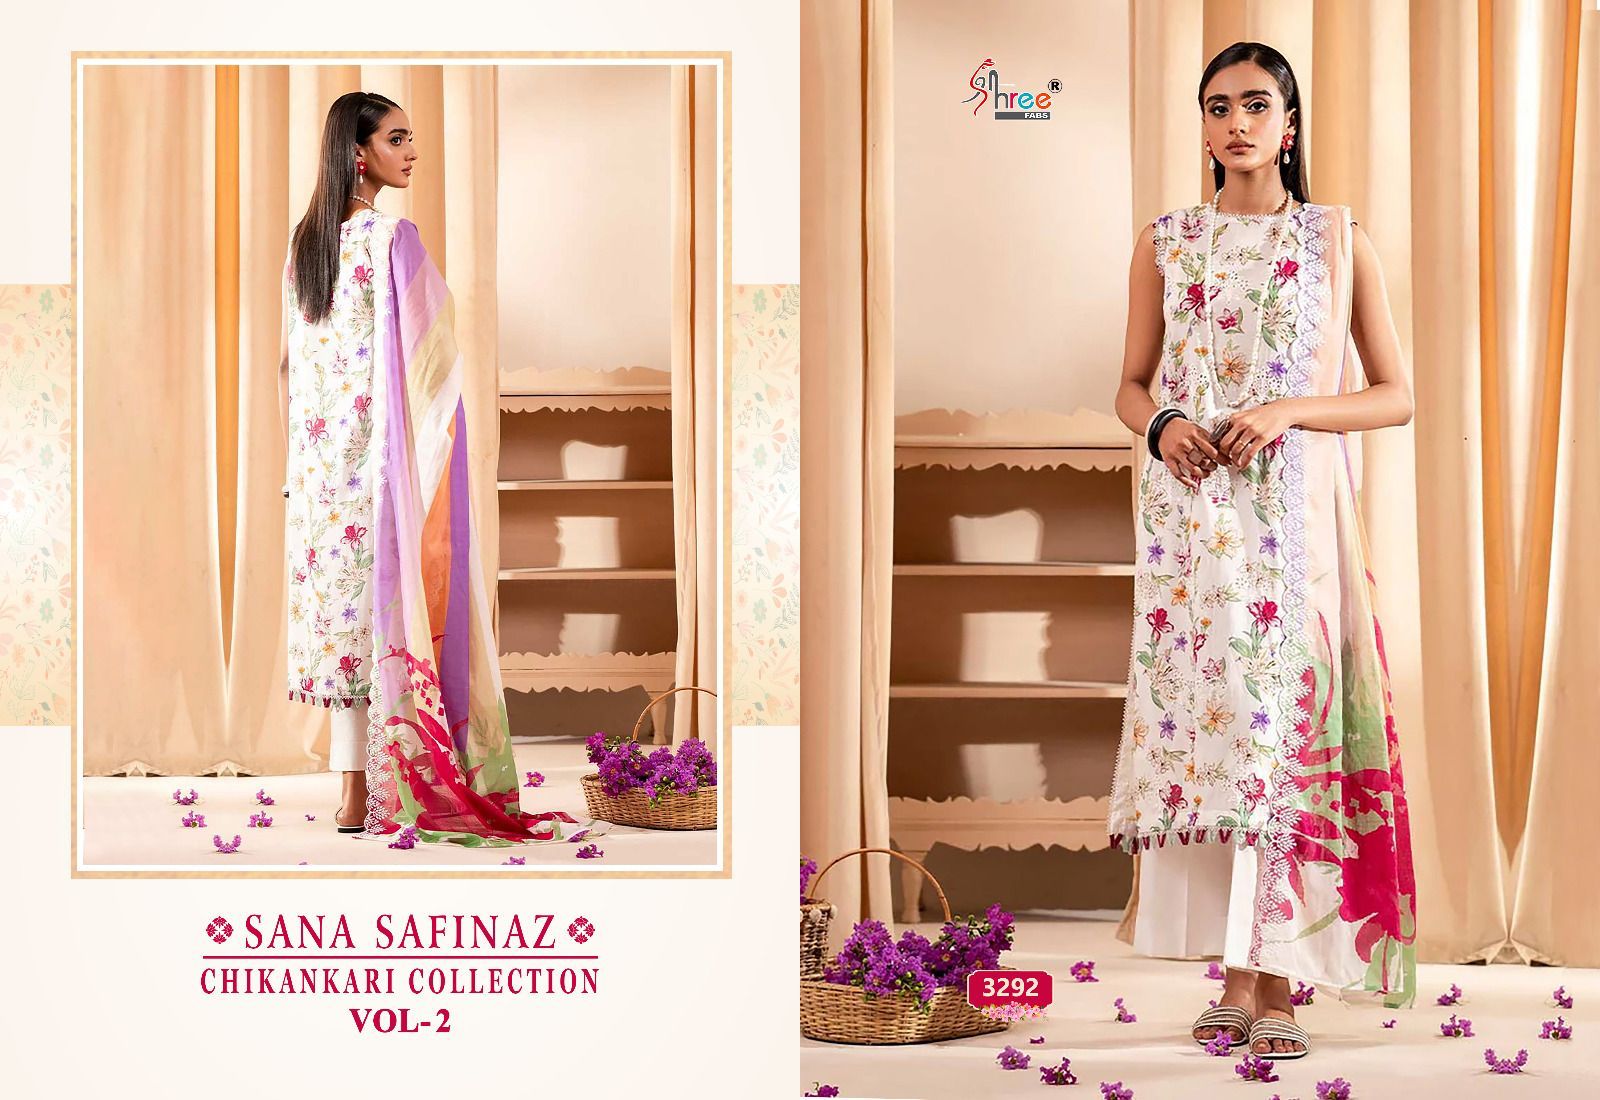 Shree fabs sana safinaz chikankari collection vol 2 cotton with embroidery work Cotton dupatta pakistani salwar suits wholesaler - jilaniwholesalesuit